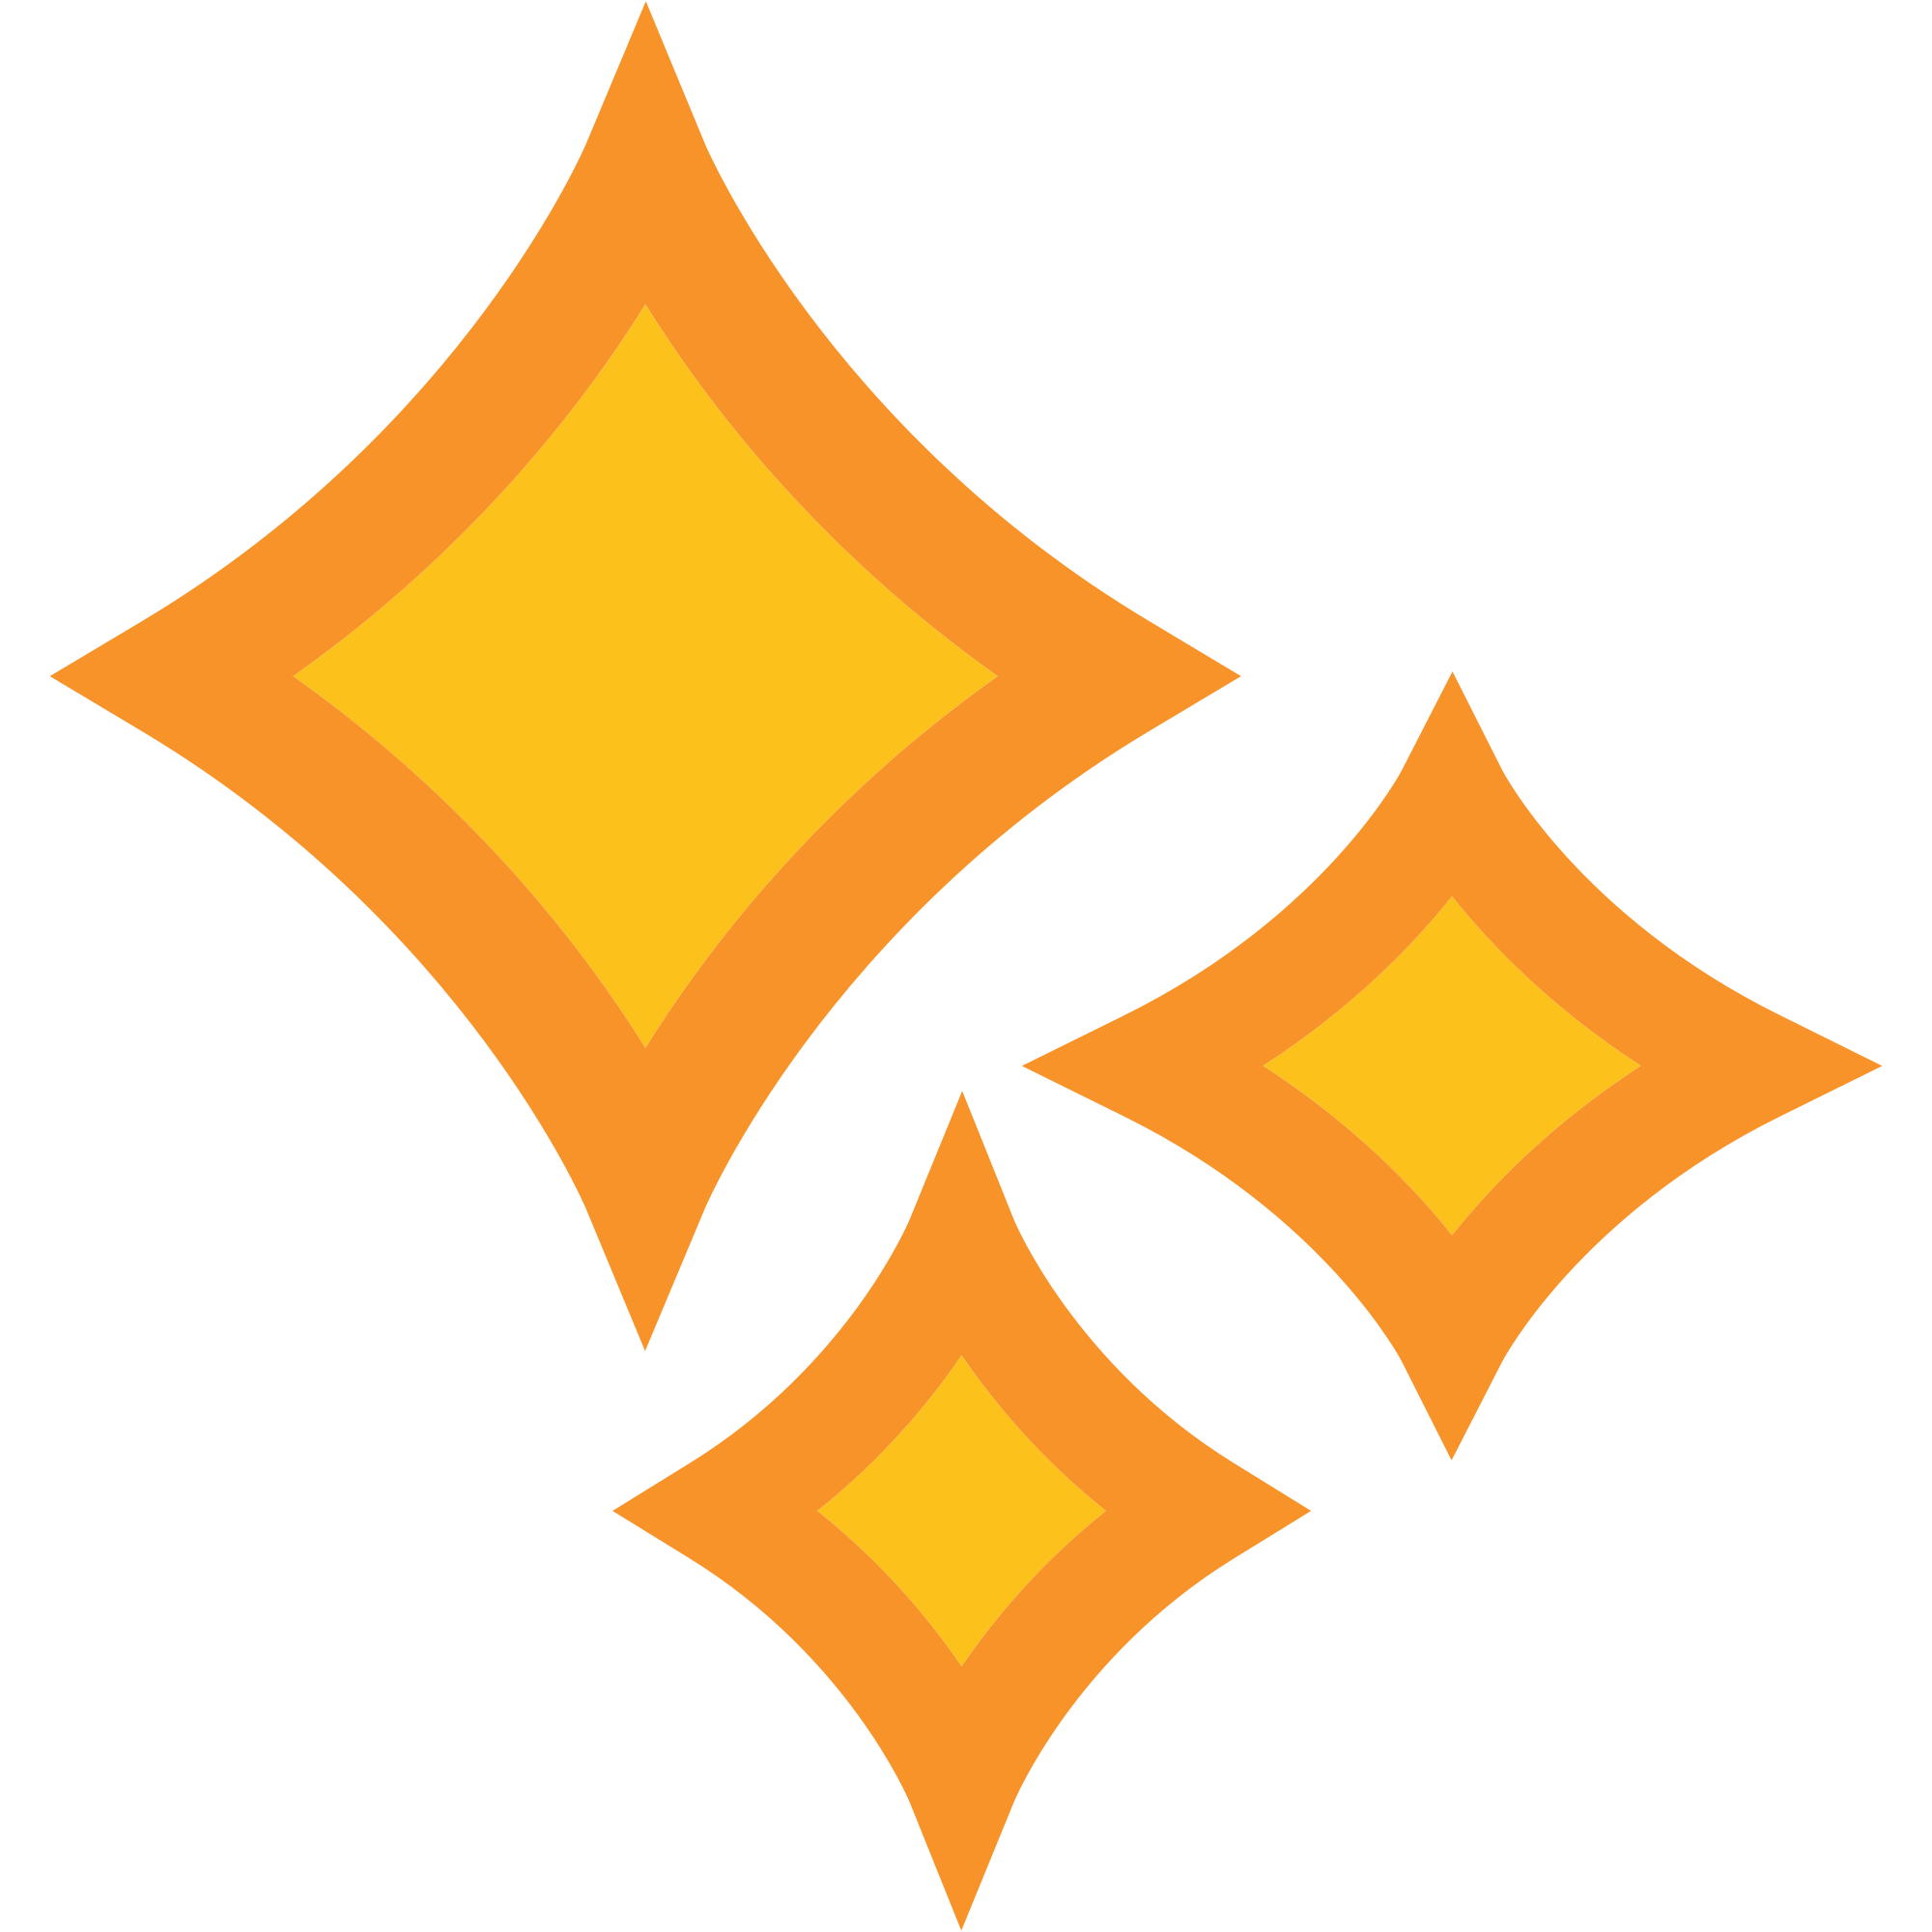 Sparkle clipart star symbol. Design logo for sparkles